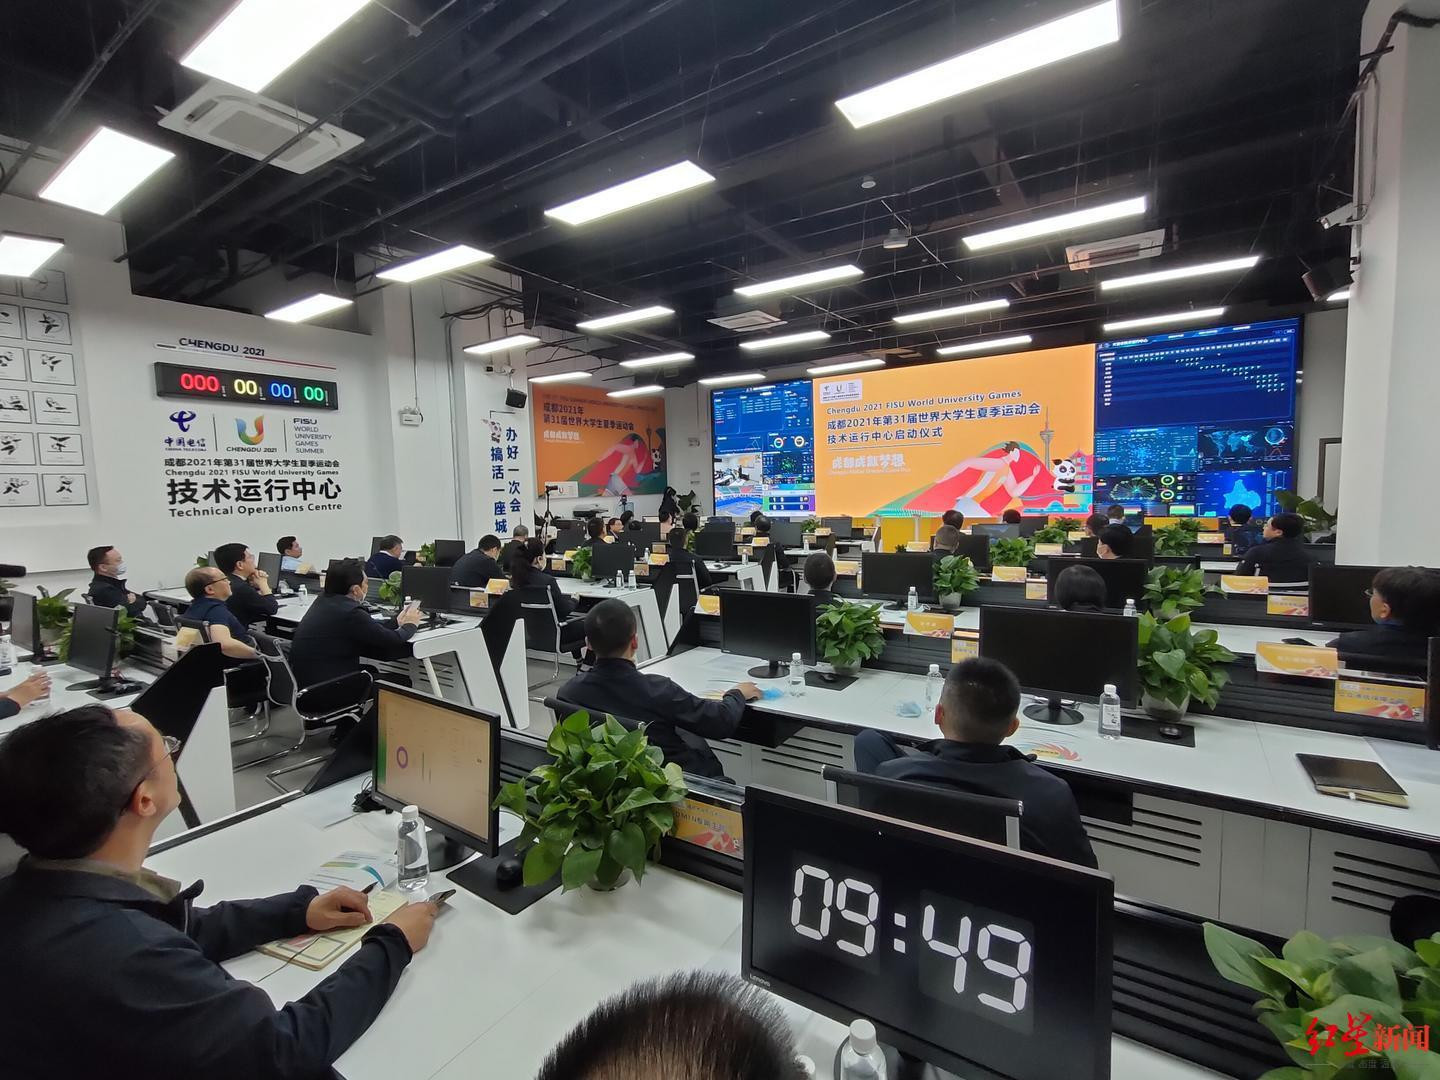 Chengdu 2021 has opened its technical operations centre ©Chengdu 2021